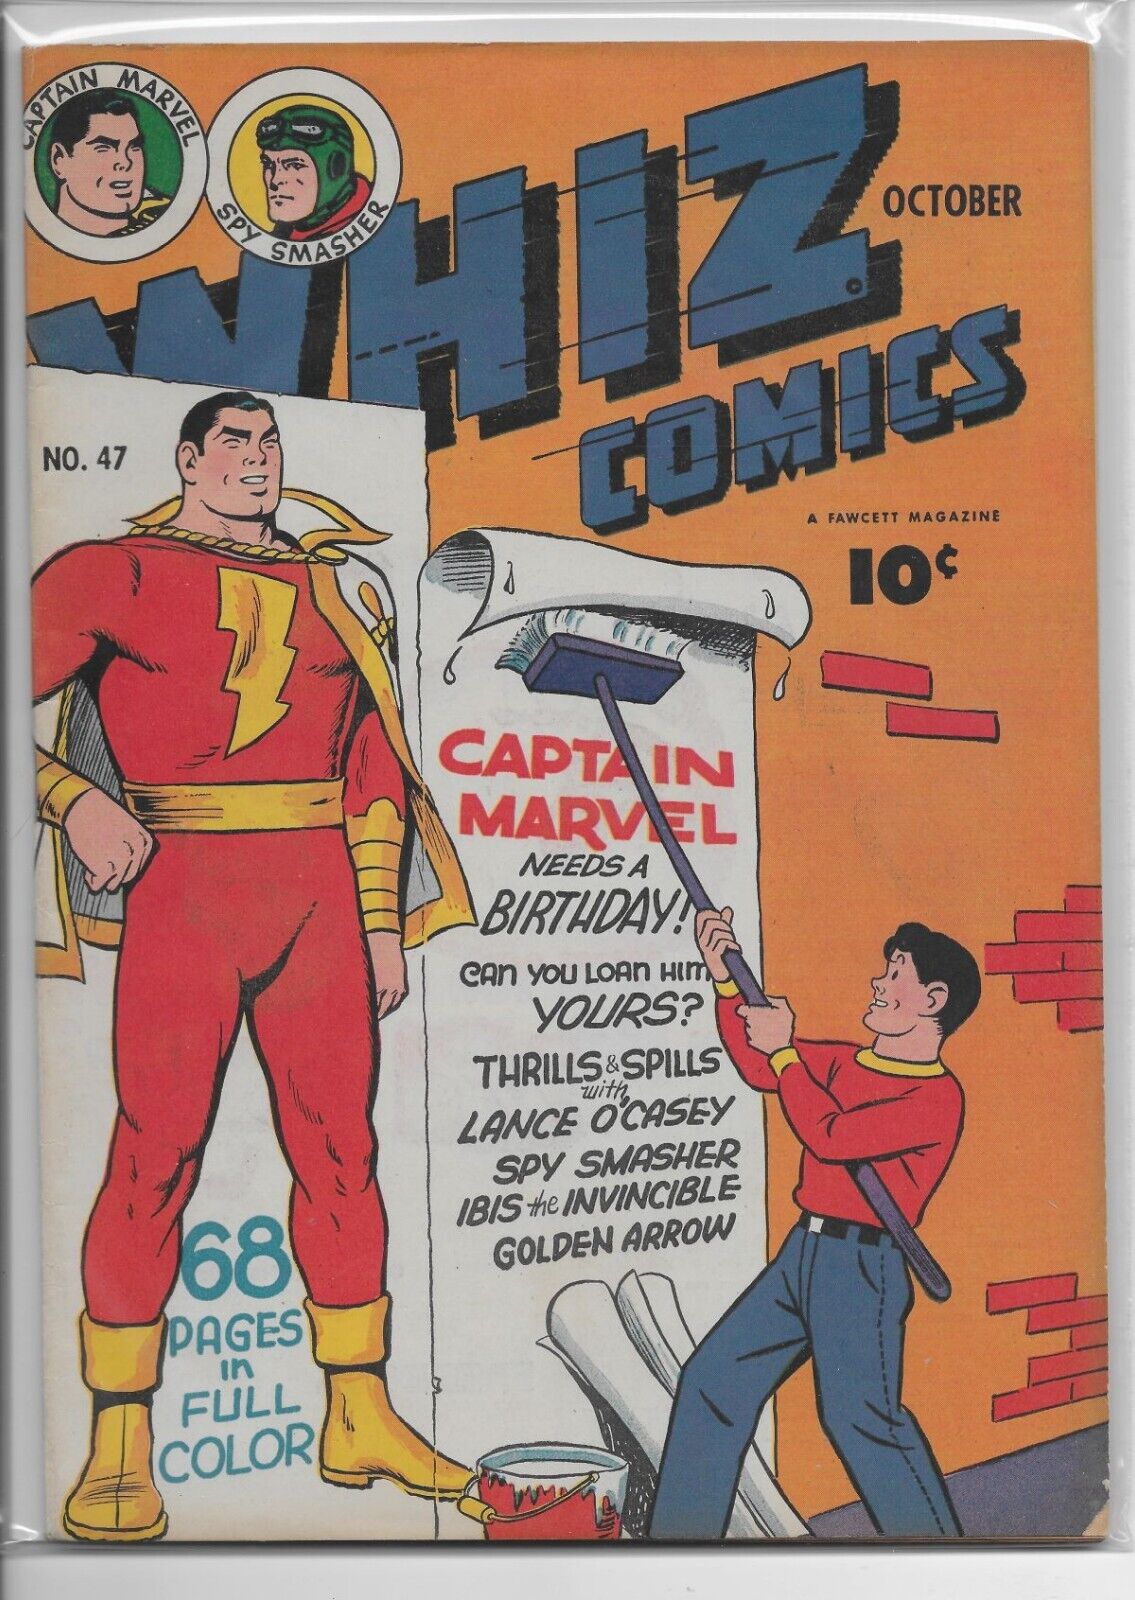 WHIZ COMICS #47 (1943) CAPTAIN MARVEL GETS A BIRTHDAY VERY SHARP COPY FINE RANGE